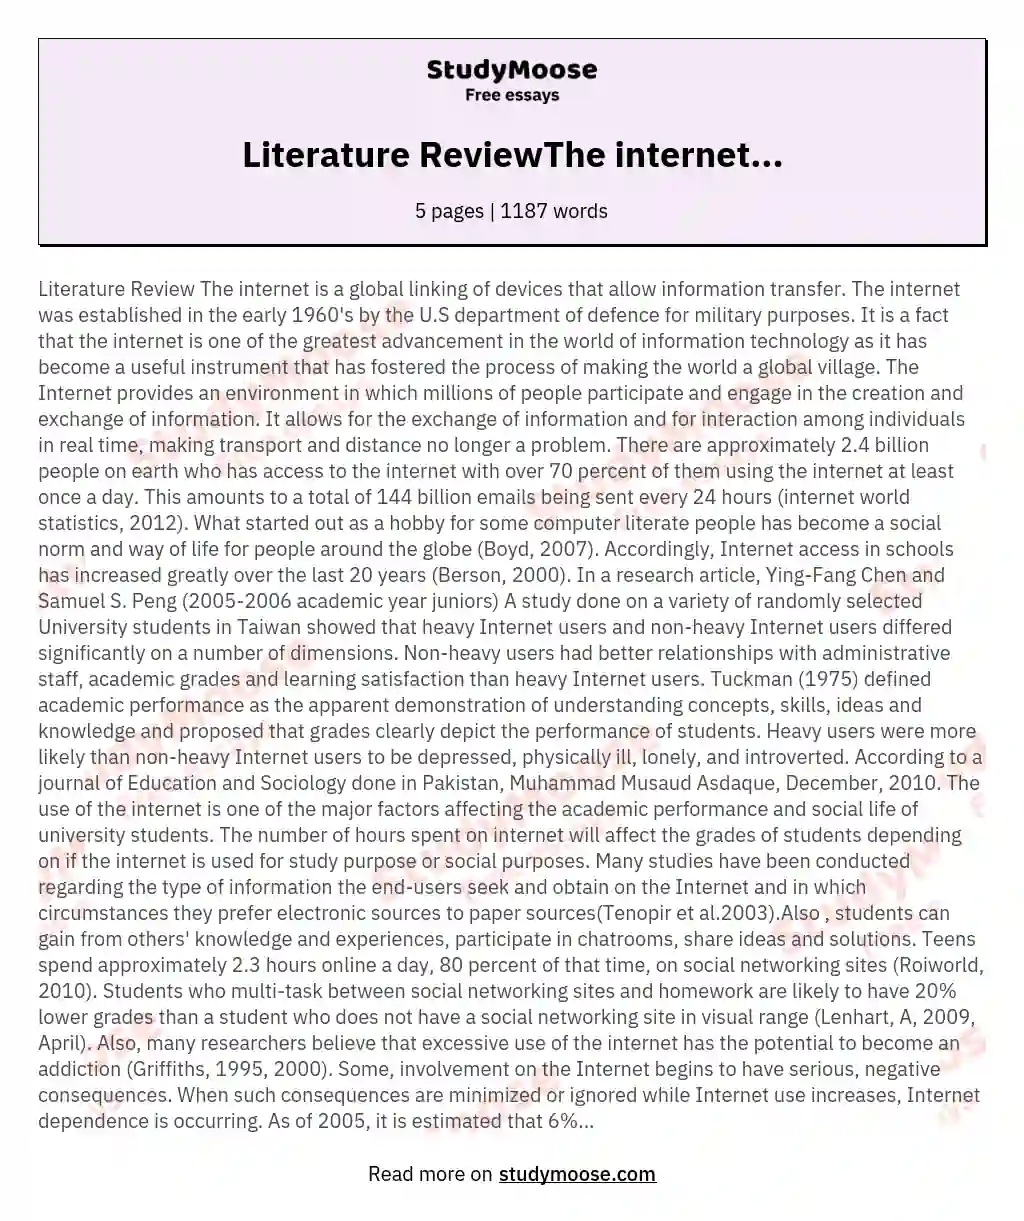 Literature ReviewThe internet... essay